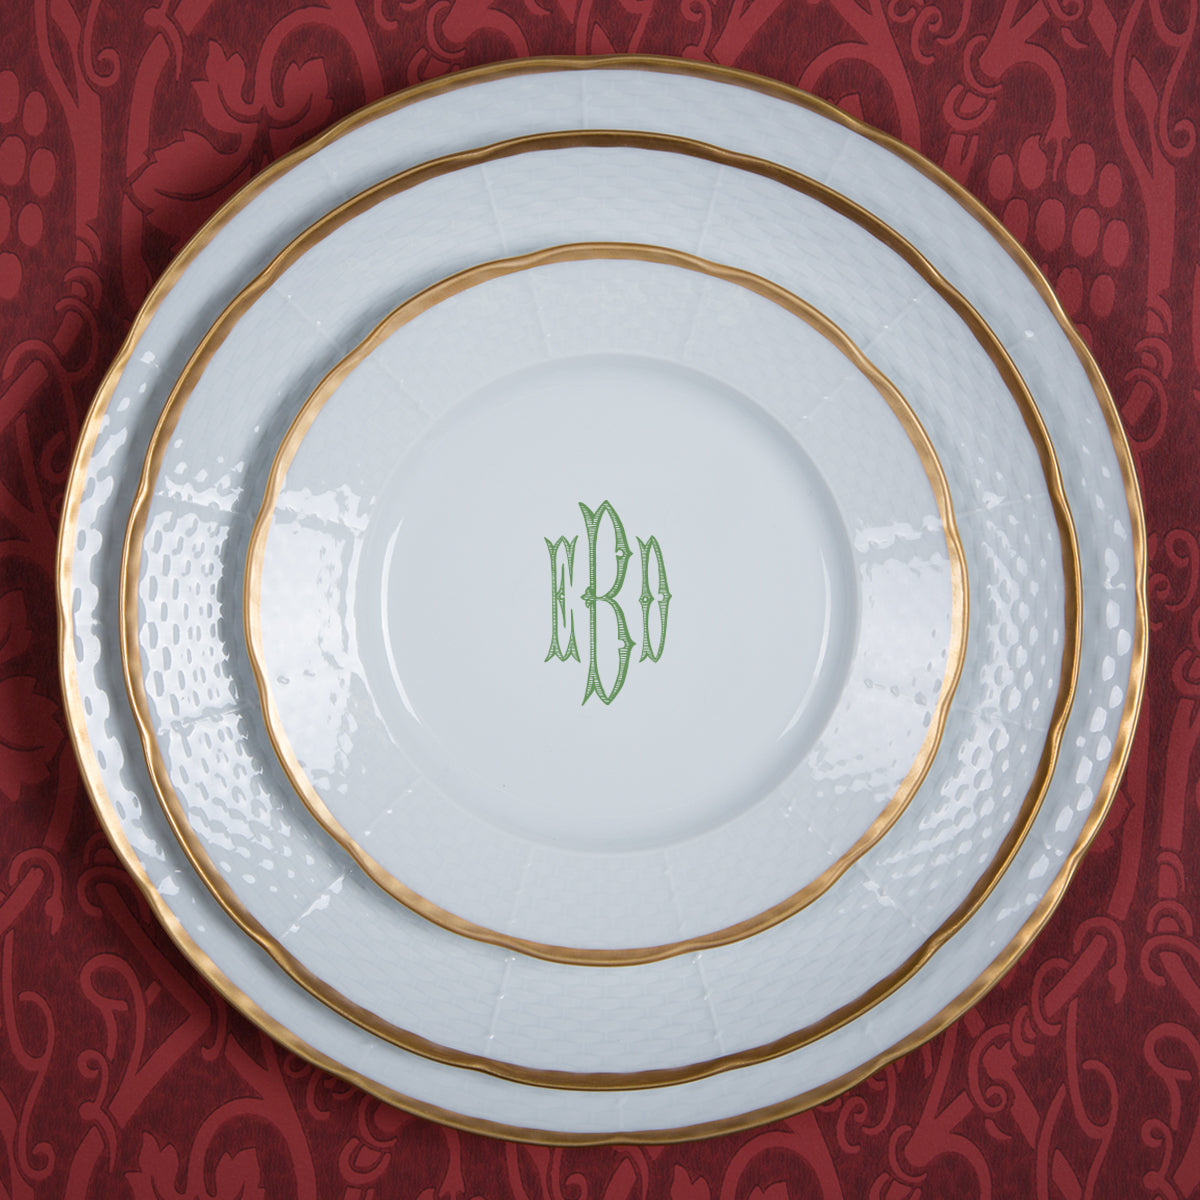 Sasha Nicholas Weave 24K Gold Salad Plate With Monogram